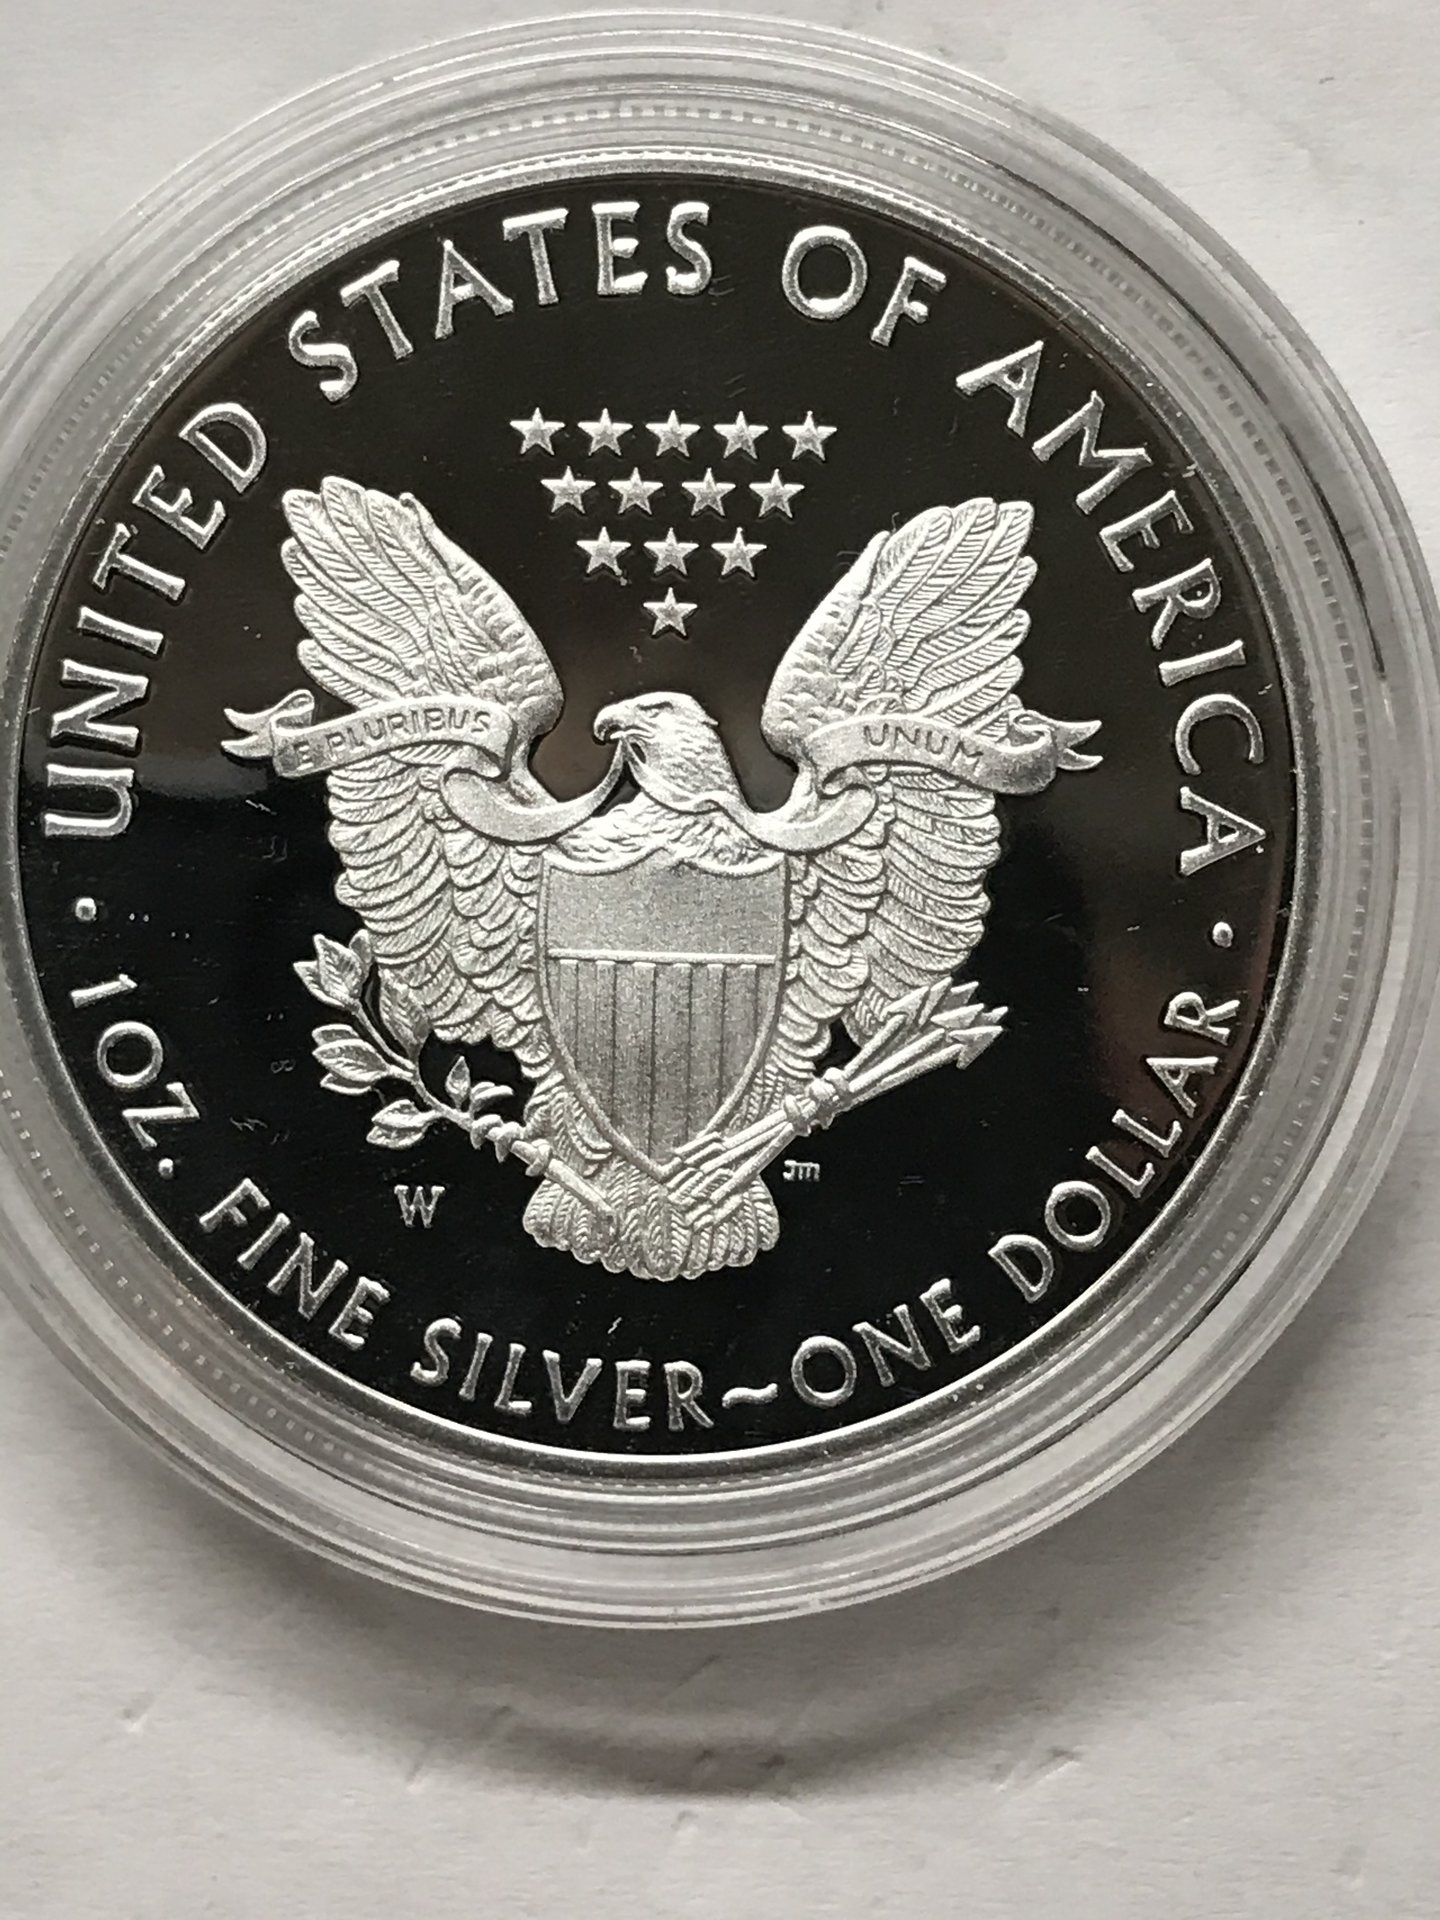 2019 silver eagle proof | Coin Talk